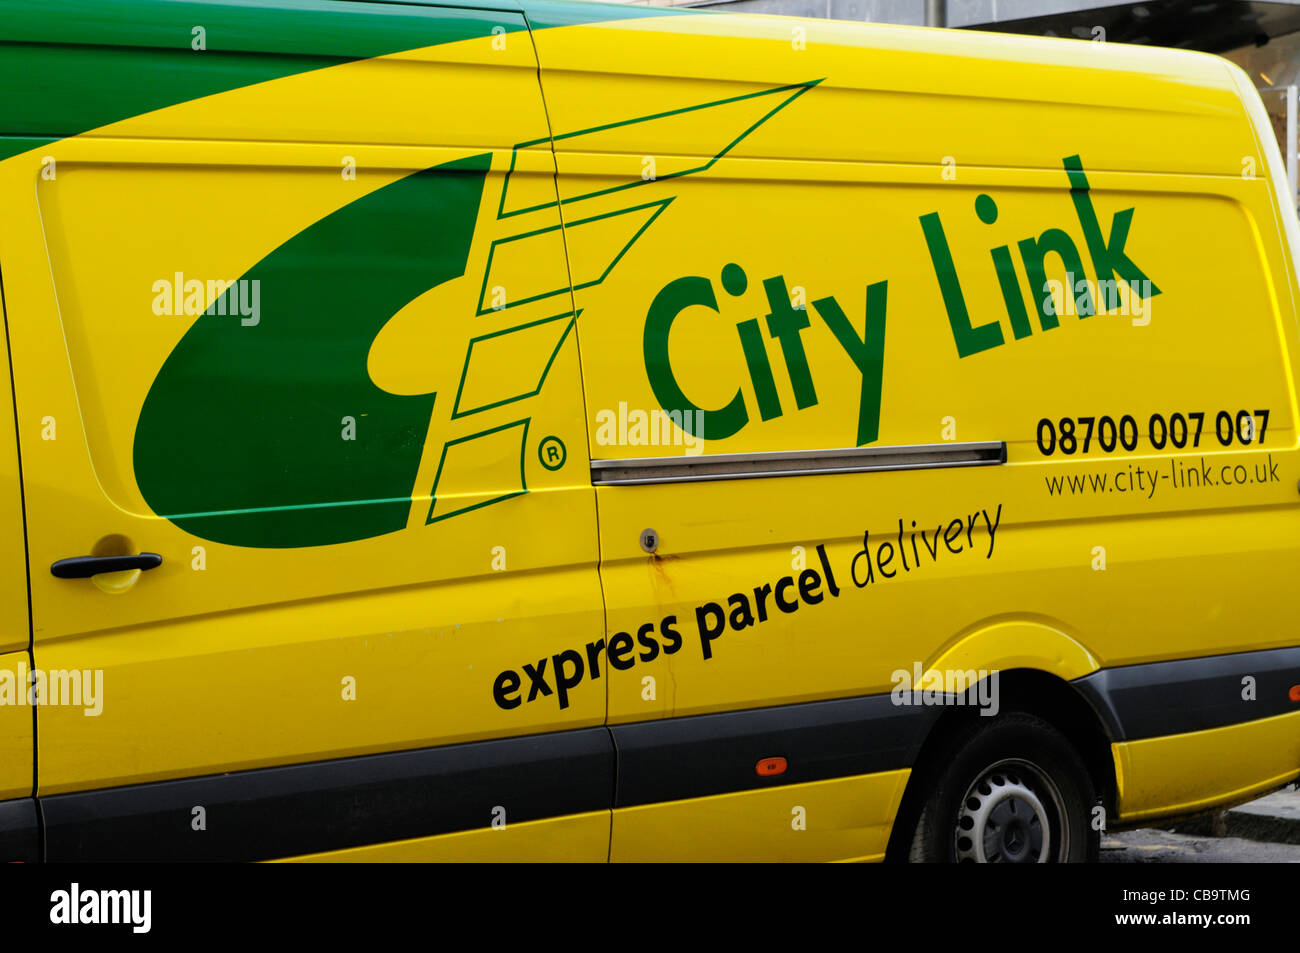 City Link Express Parcel Delivery Van, Cambridge, England, UK Stock Photo